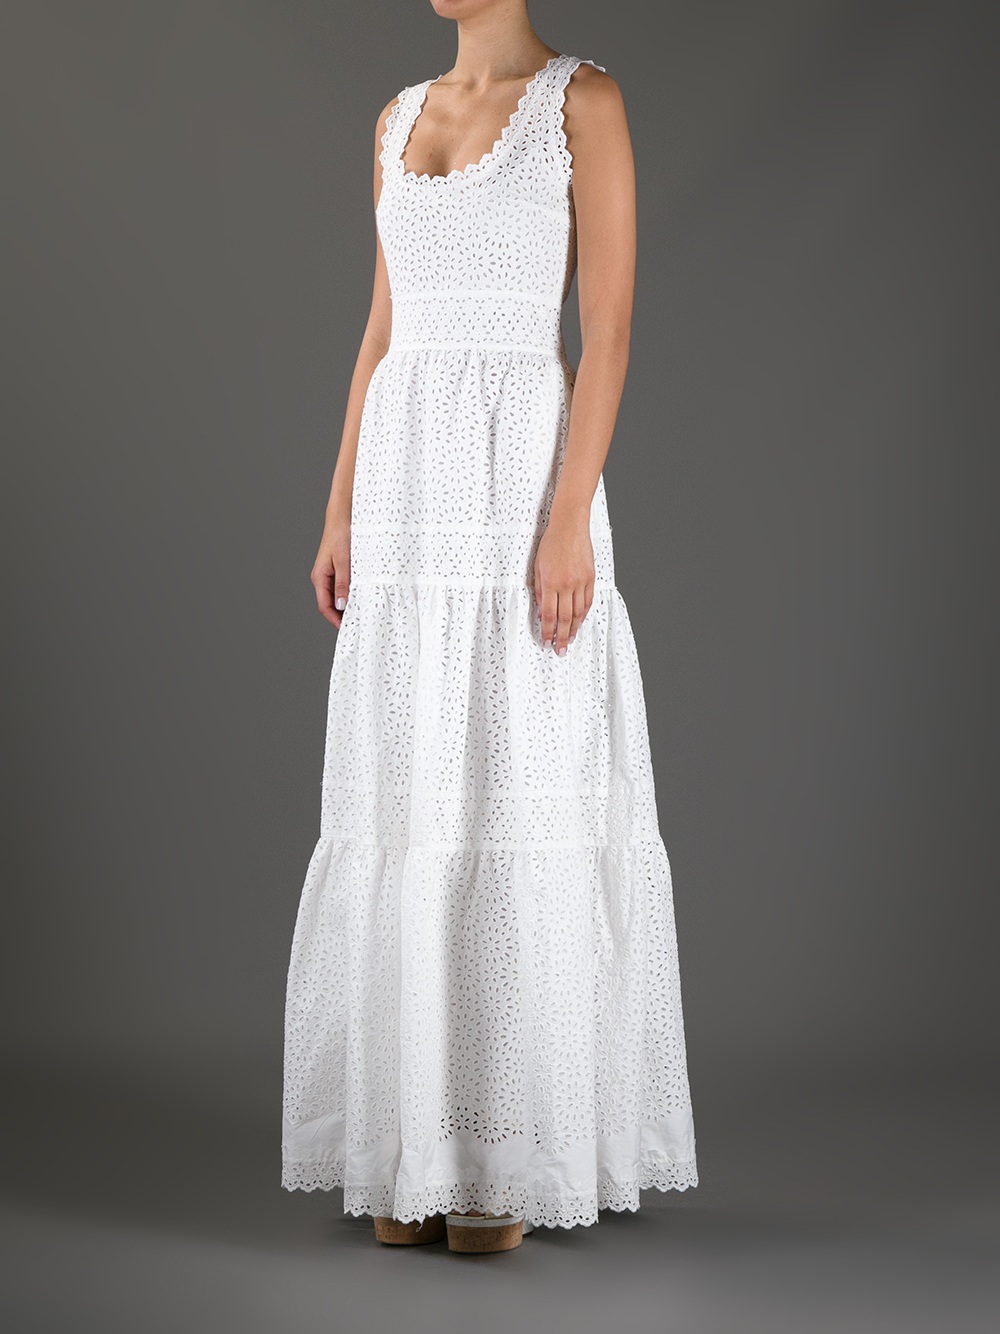 Luisa Beccaria Eyelet Maxi Dress in White - Lyst